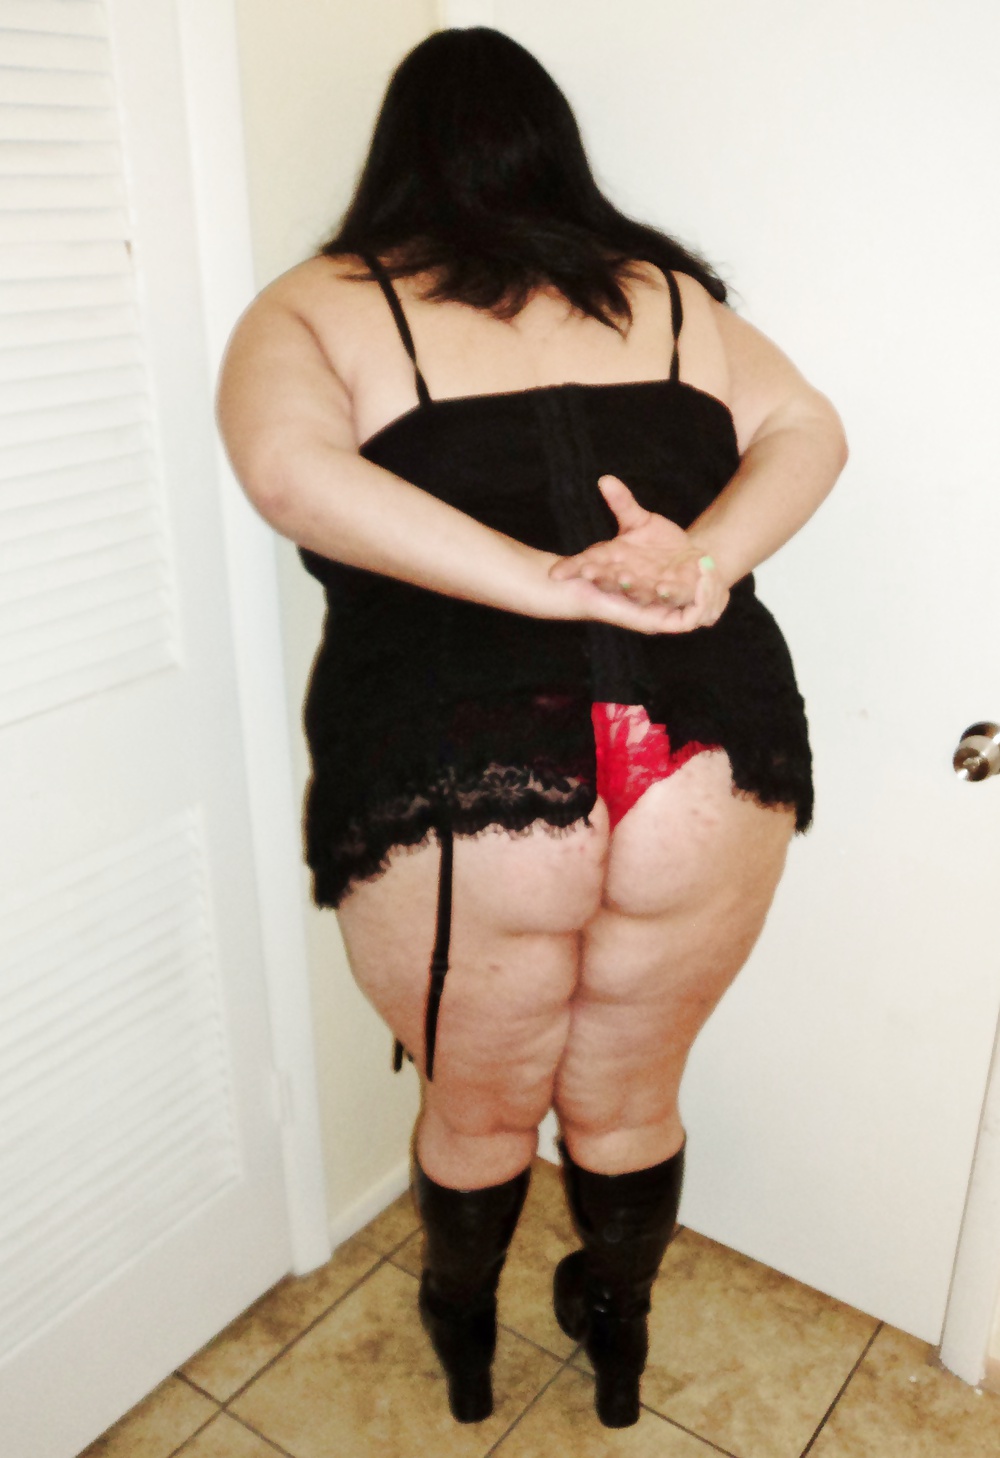 Sex corset pics 2 image